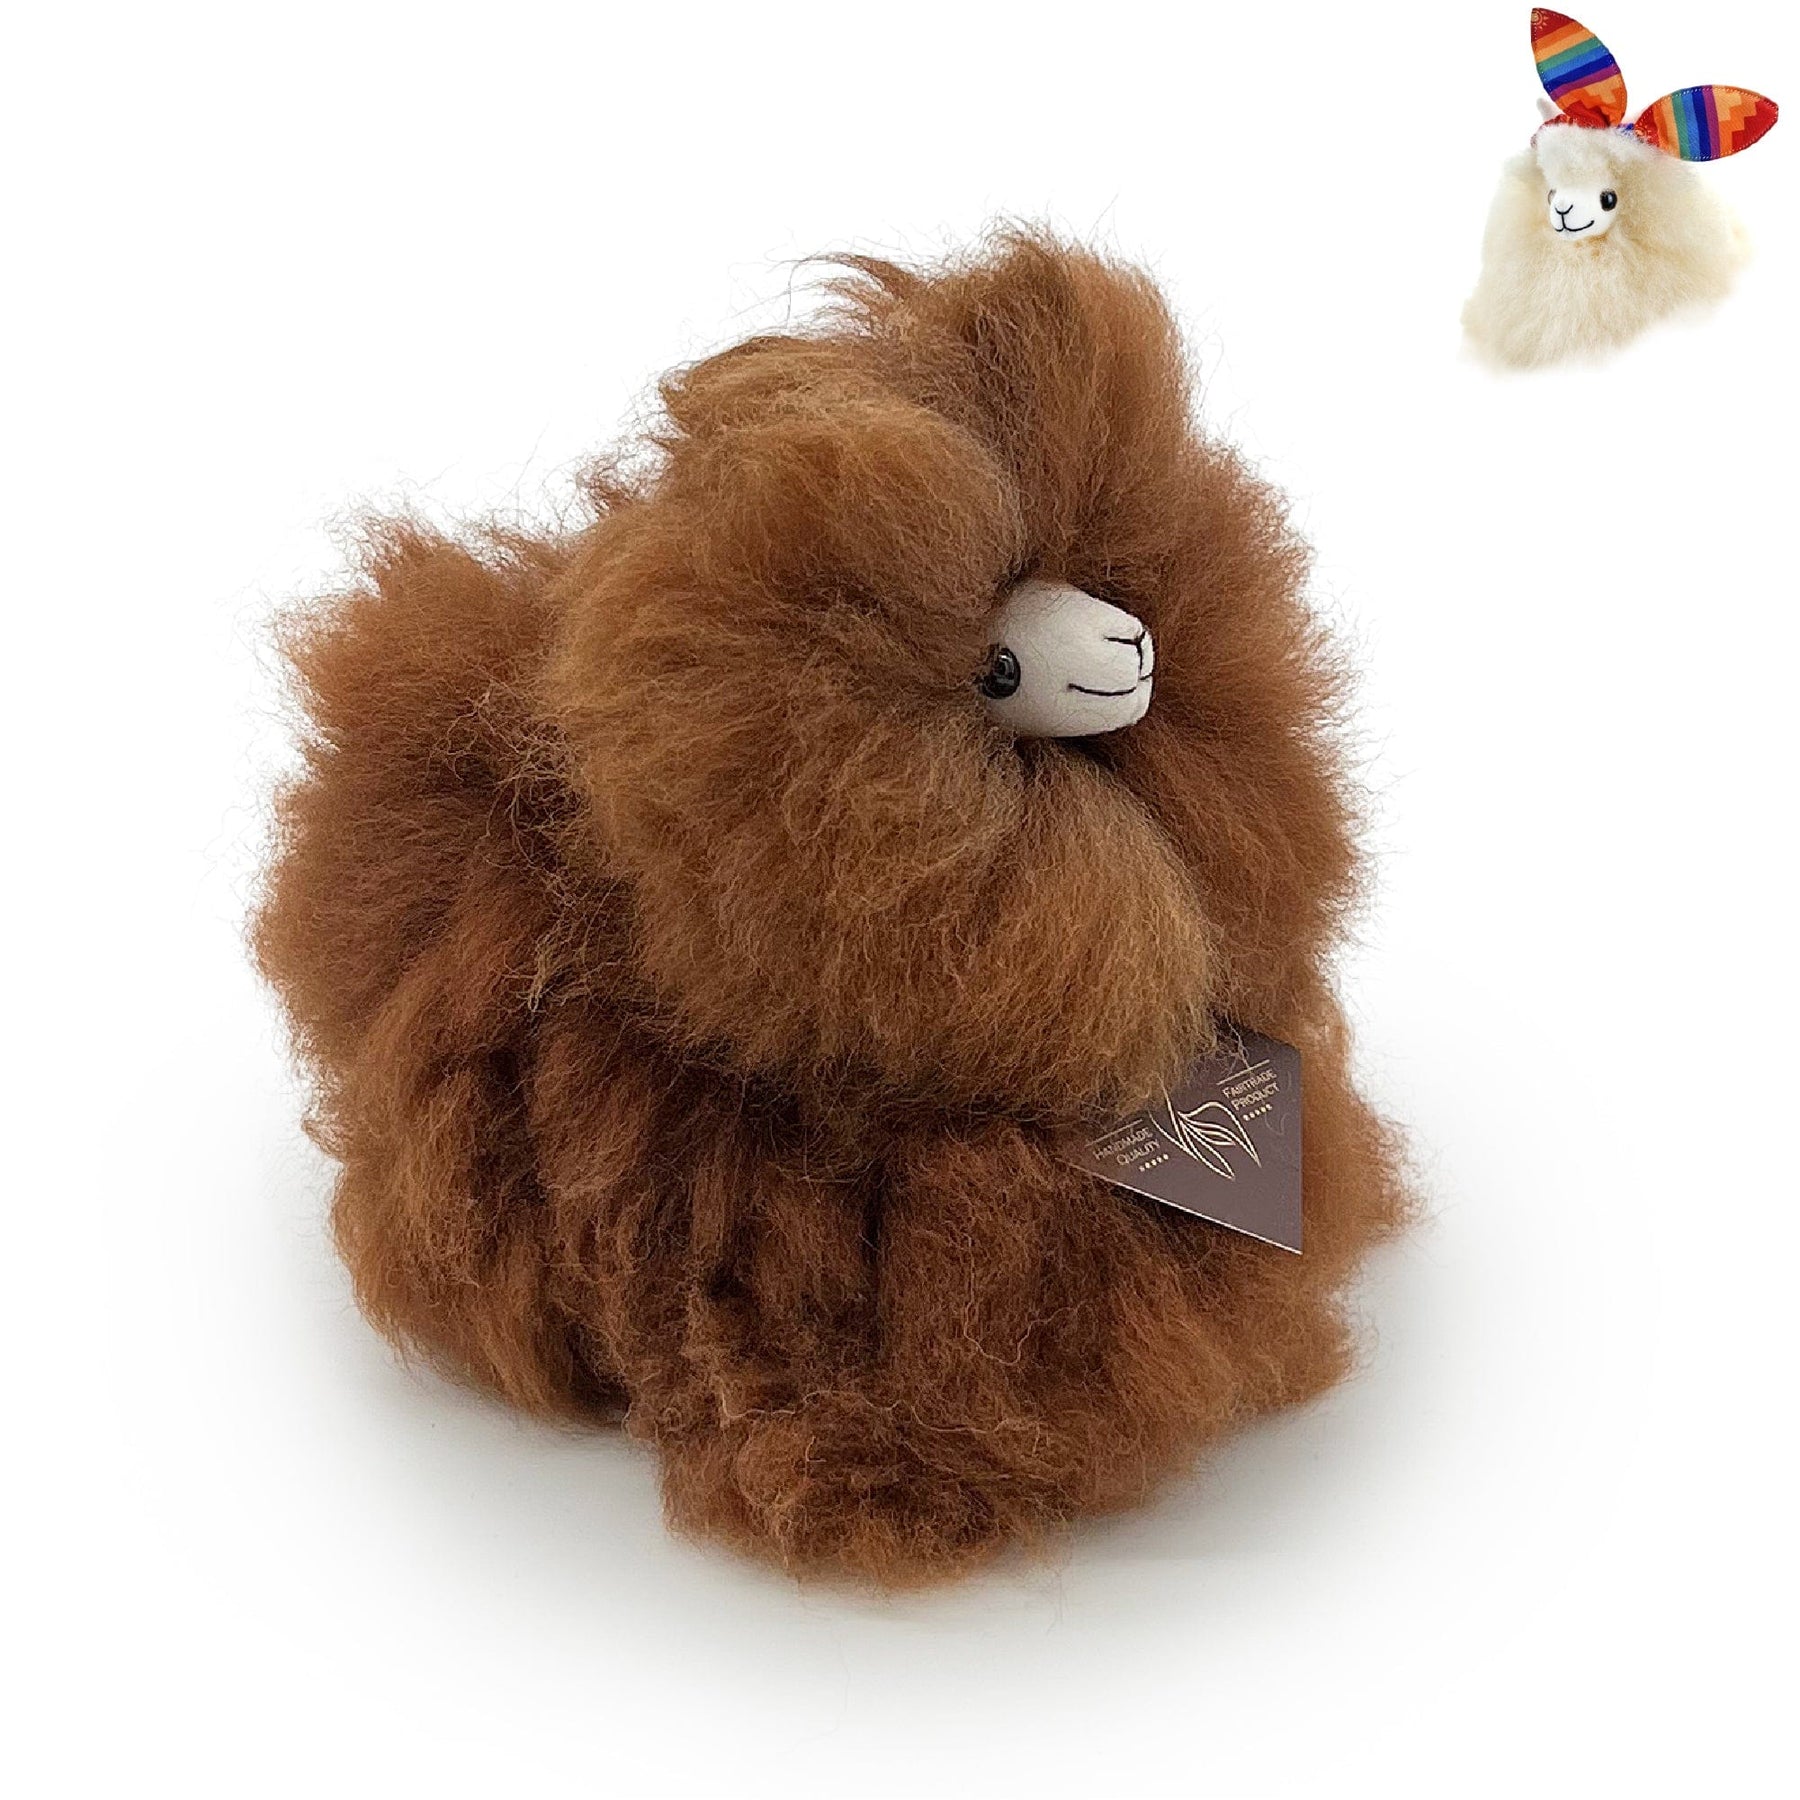 Fluff Monsters - Mini (15cm) - Alpaca Stuffed Animal